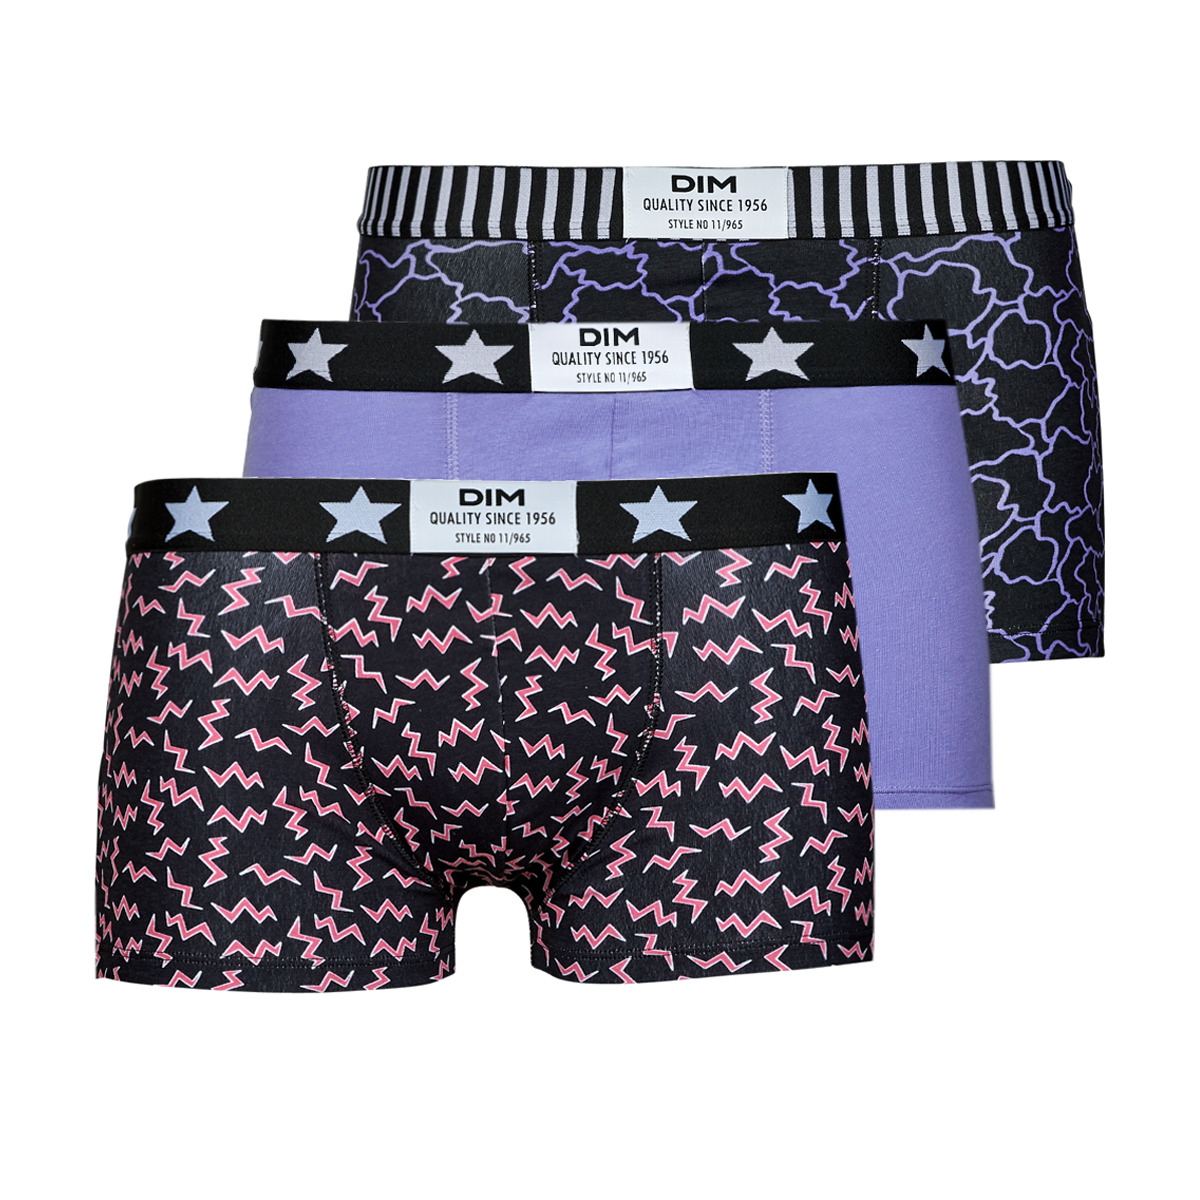 DIM DIM VIBES x3 Multicolour - Fast delivery  Spartoo Europe ! - Underwear  Boxer shorts Men 30,00 €